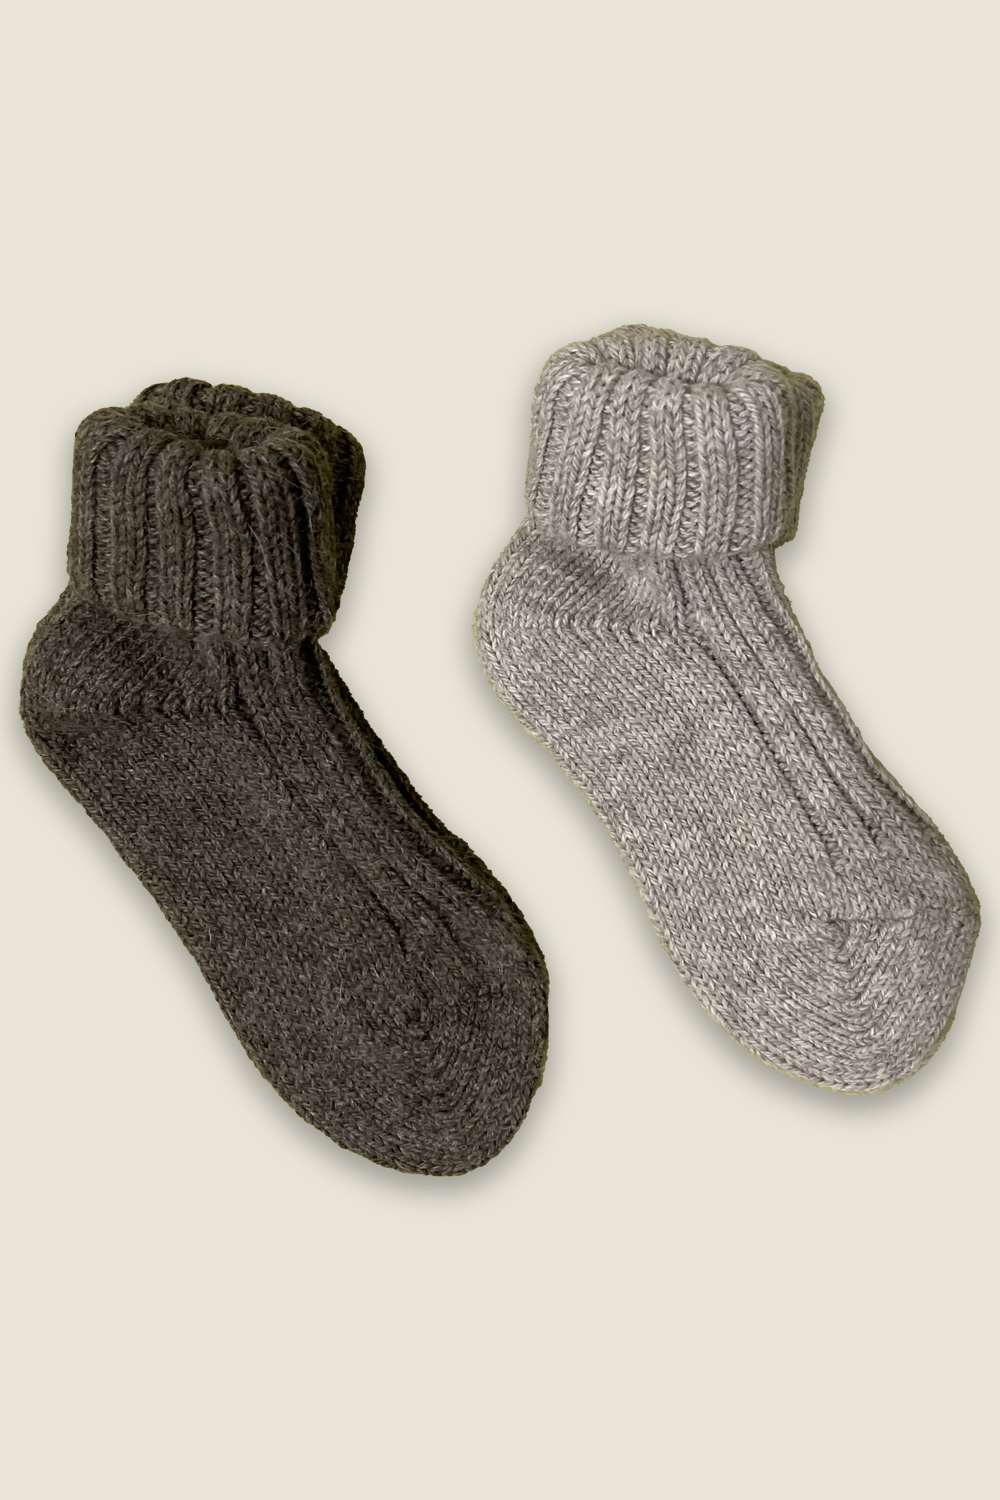 Alpaca Socks - grey and brown - 2 pairs